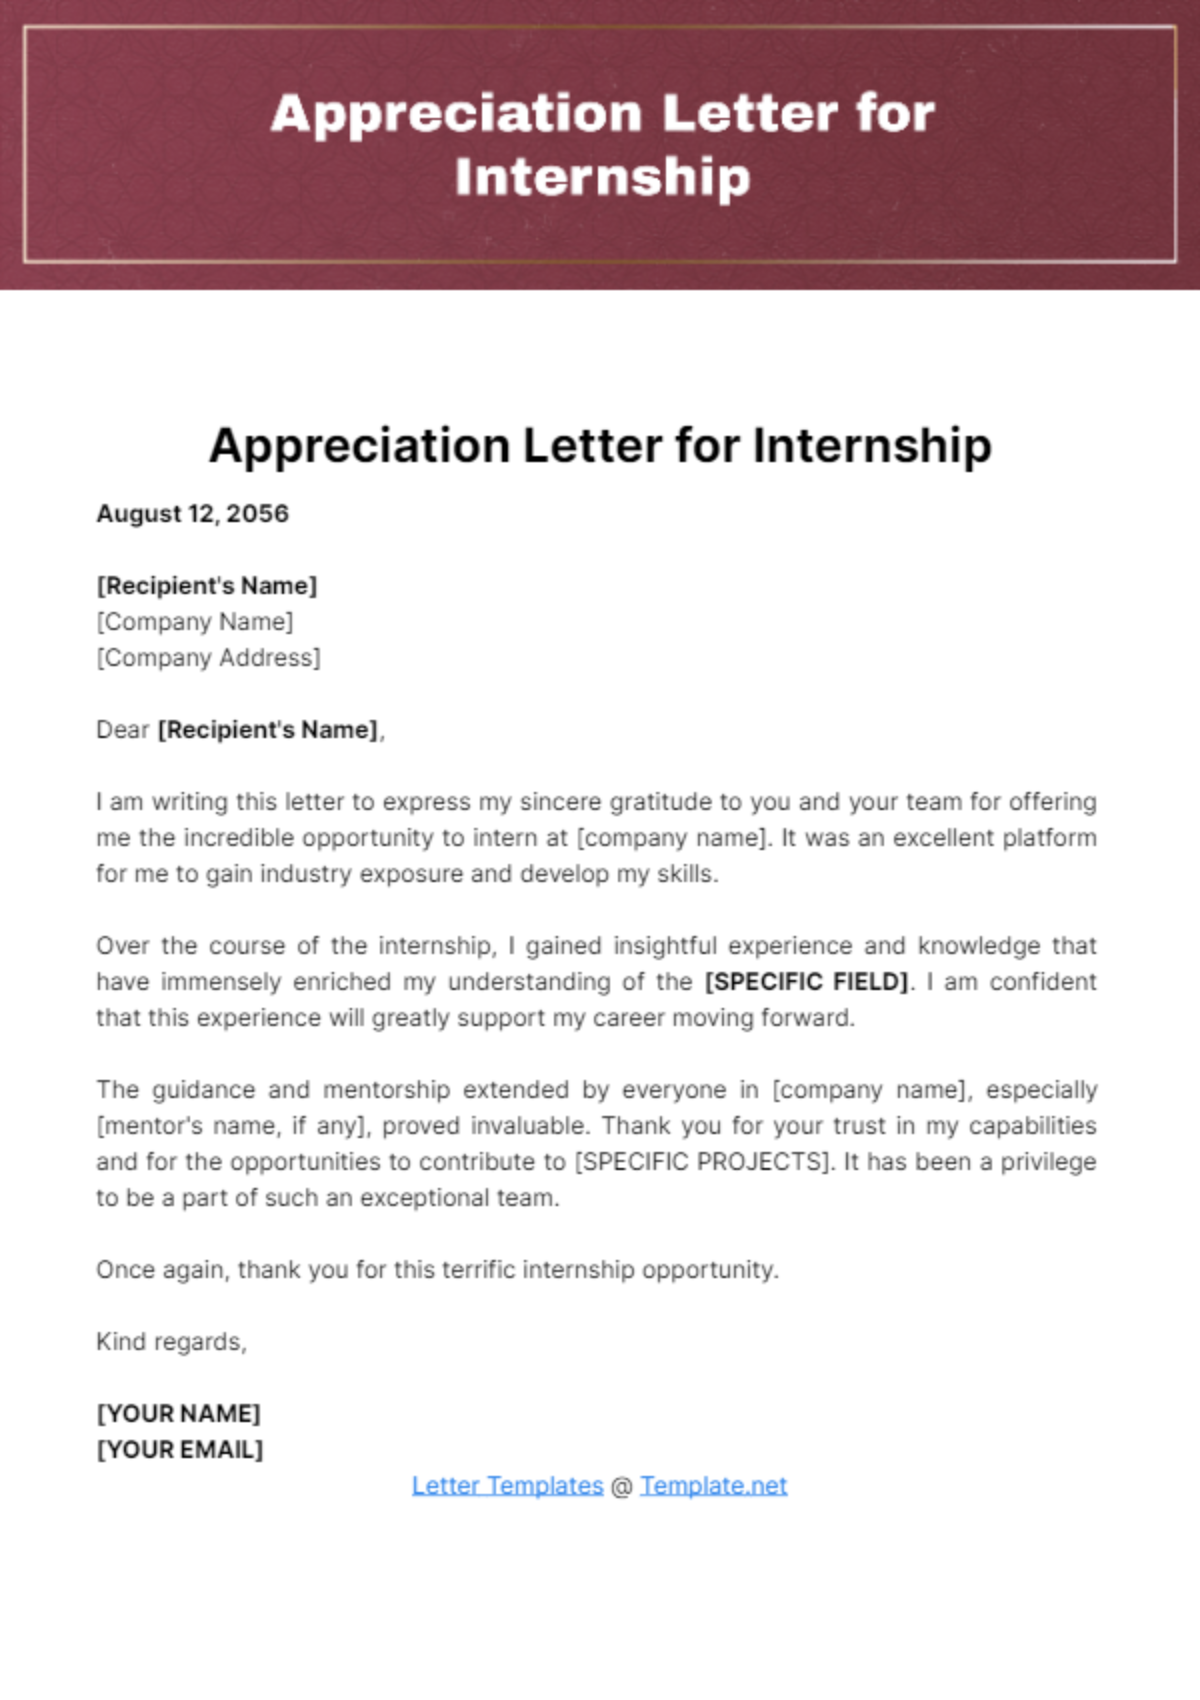 Free Appreciation Letter for Internship Template